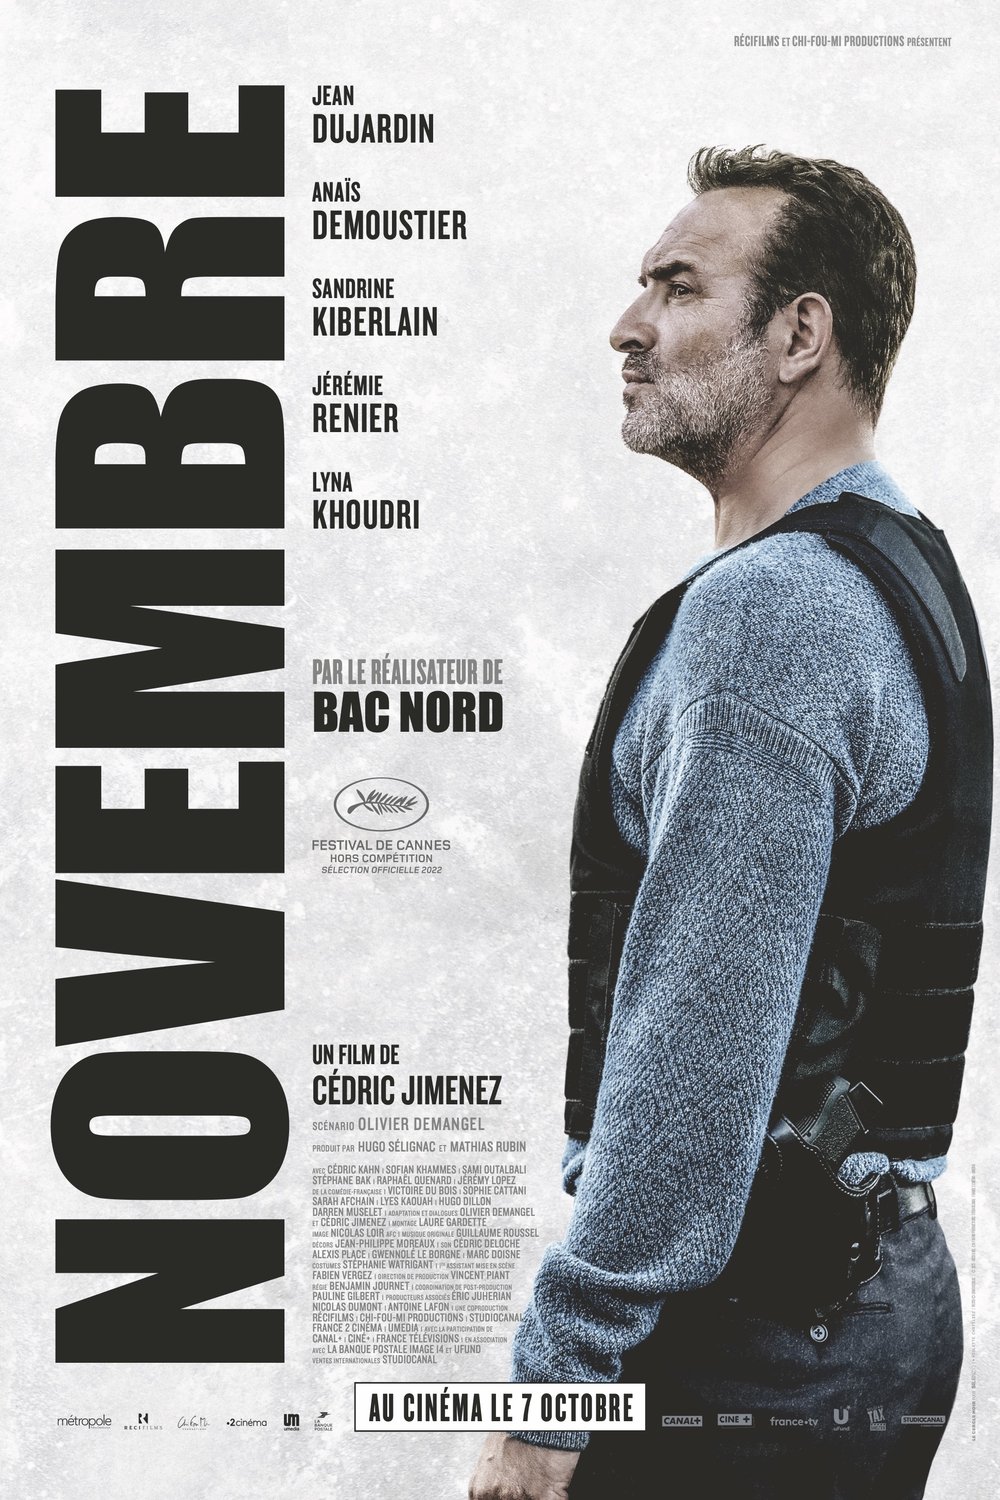 Poster of the movie Novembre